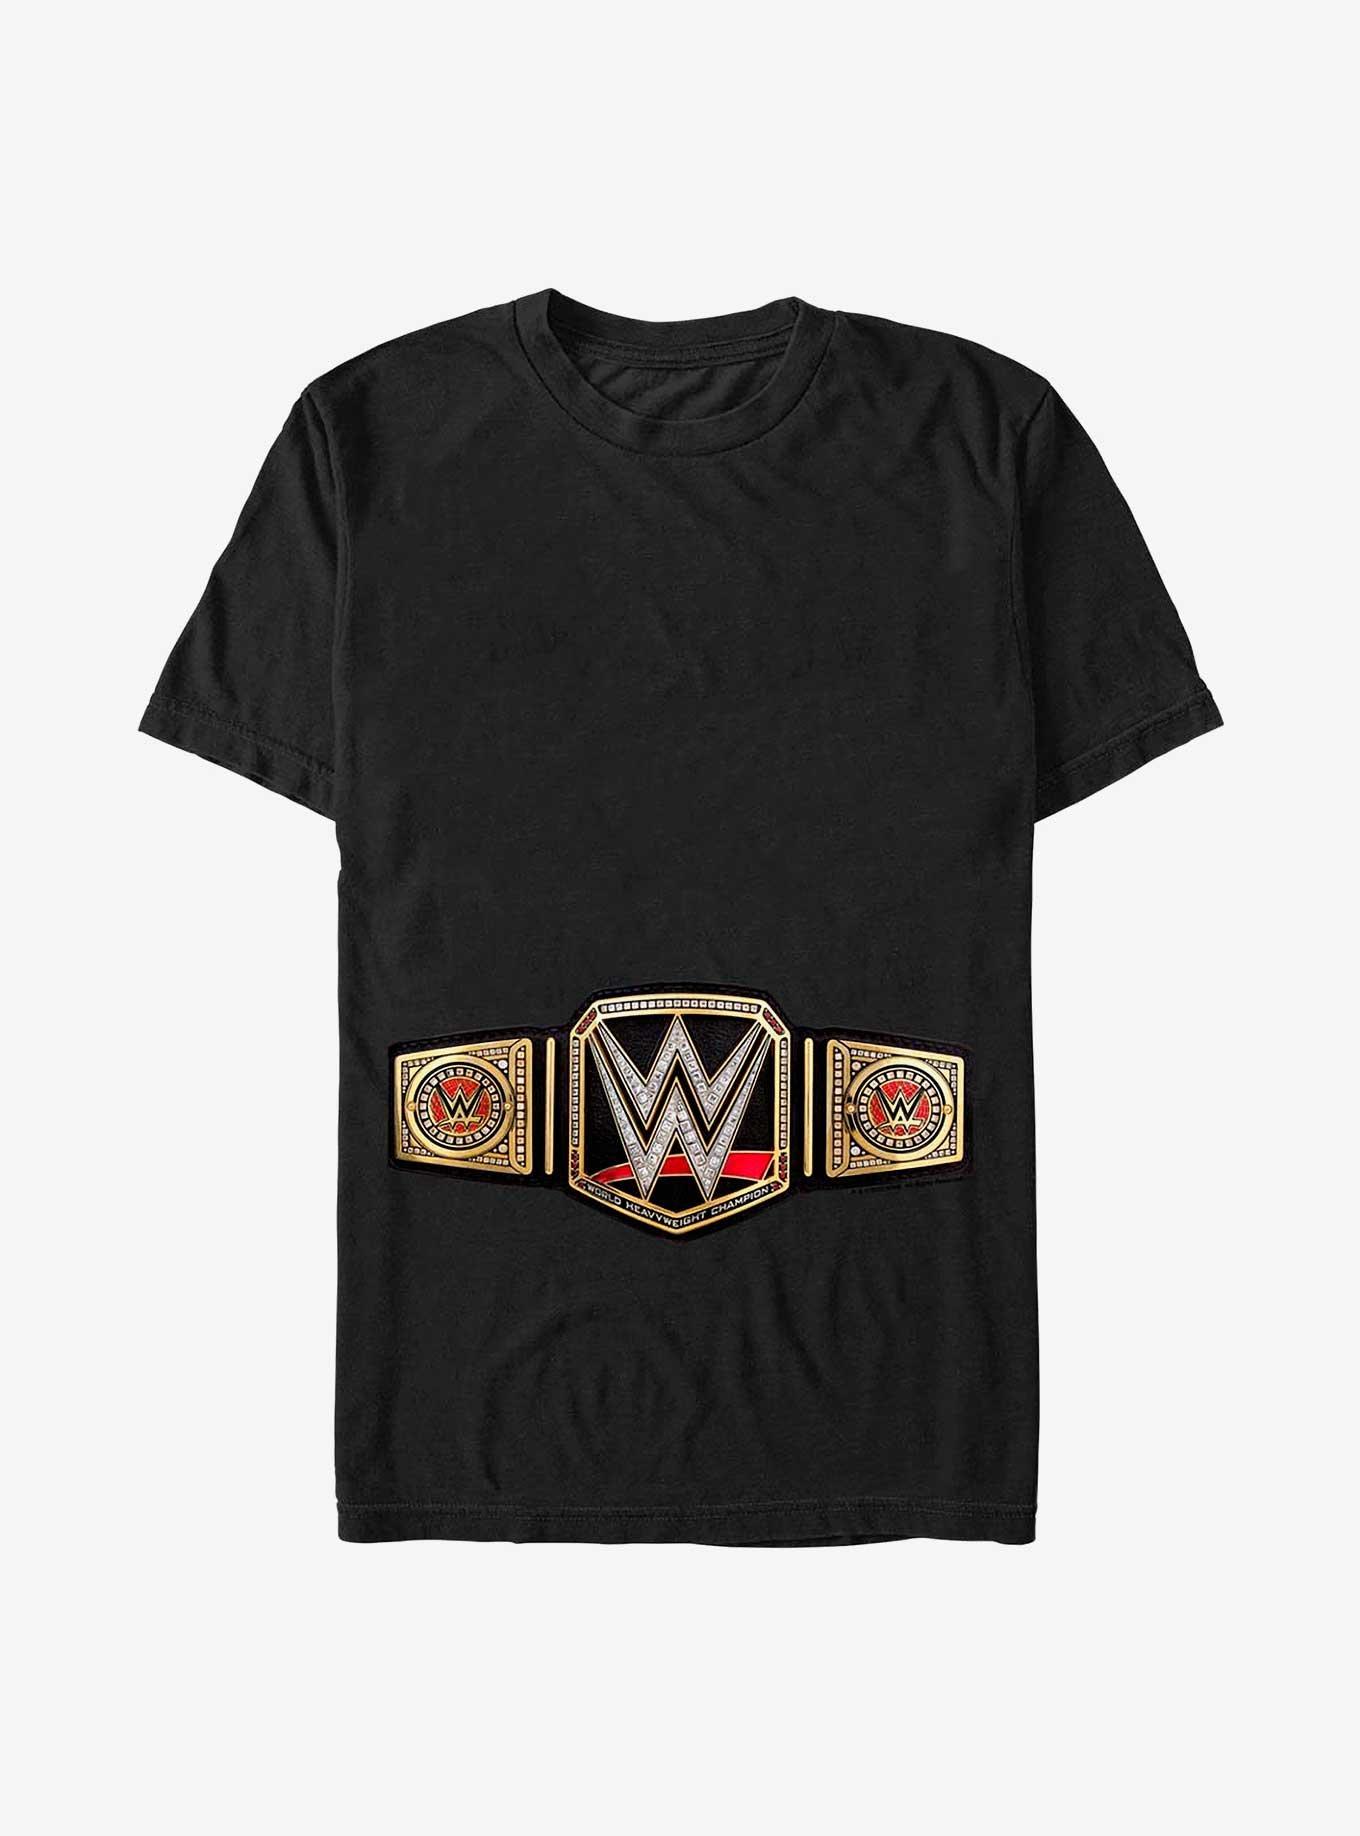 WWE Championship Belt T-Shirt, BLACK, hi-res